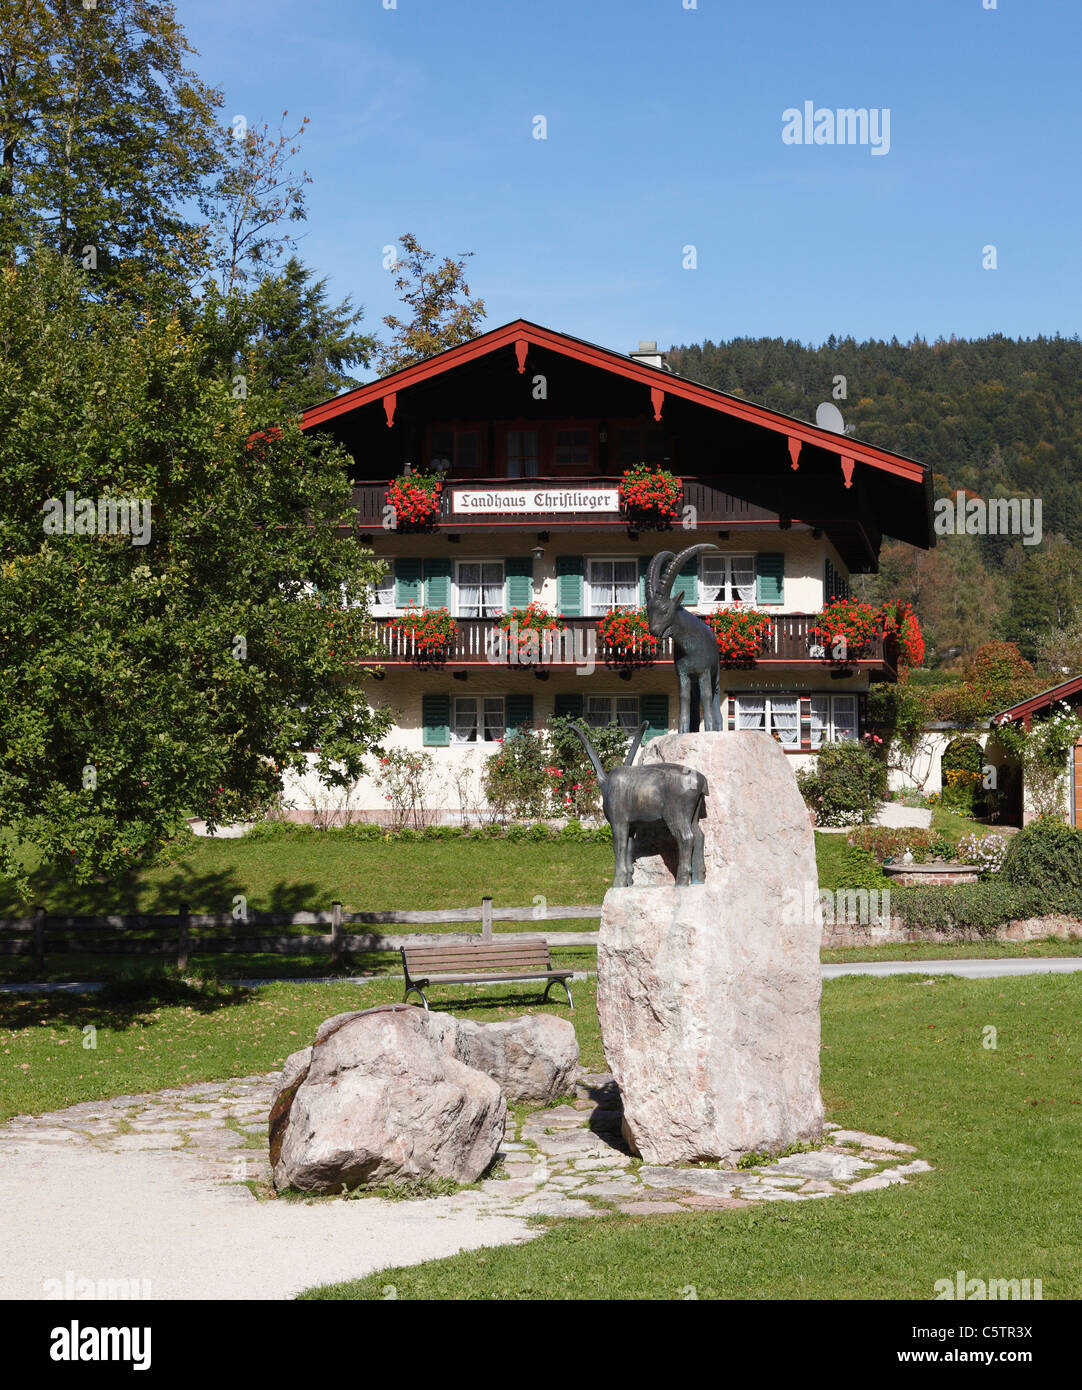 Germany, Bavaria, Upper Bavaria, Berchtesgaden Land, Koenigssee lake, Schoenau, Landhaus Christlieger ibex sculpture on rock Stock Photo